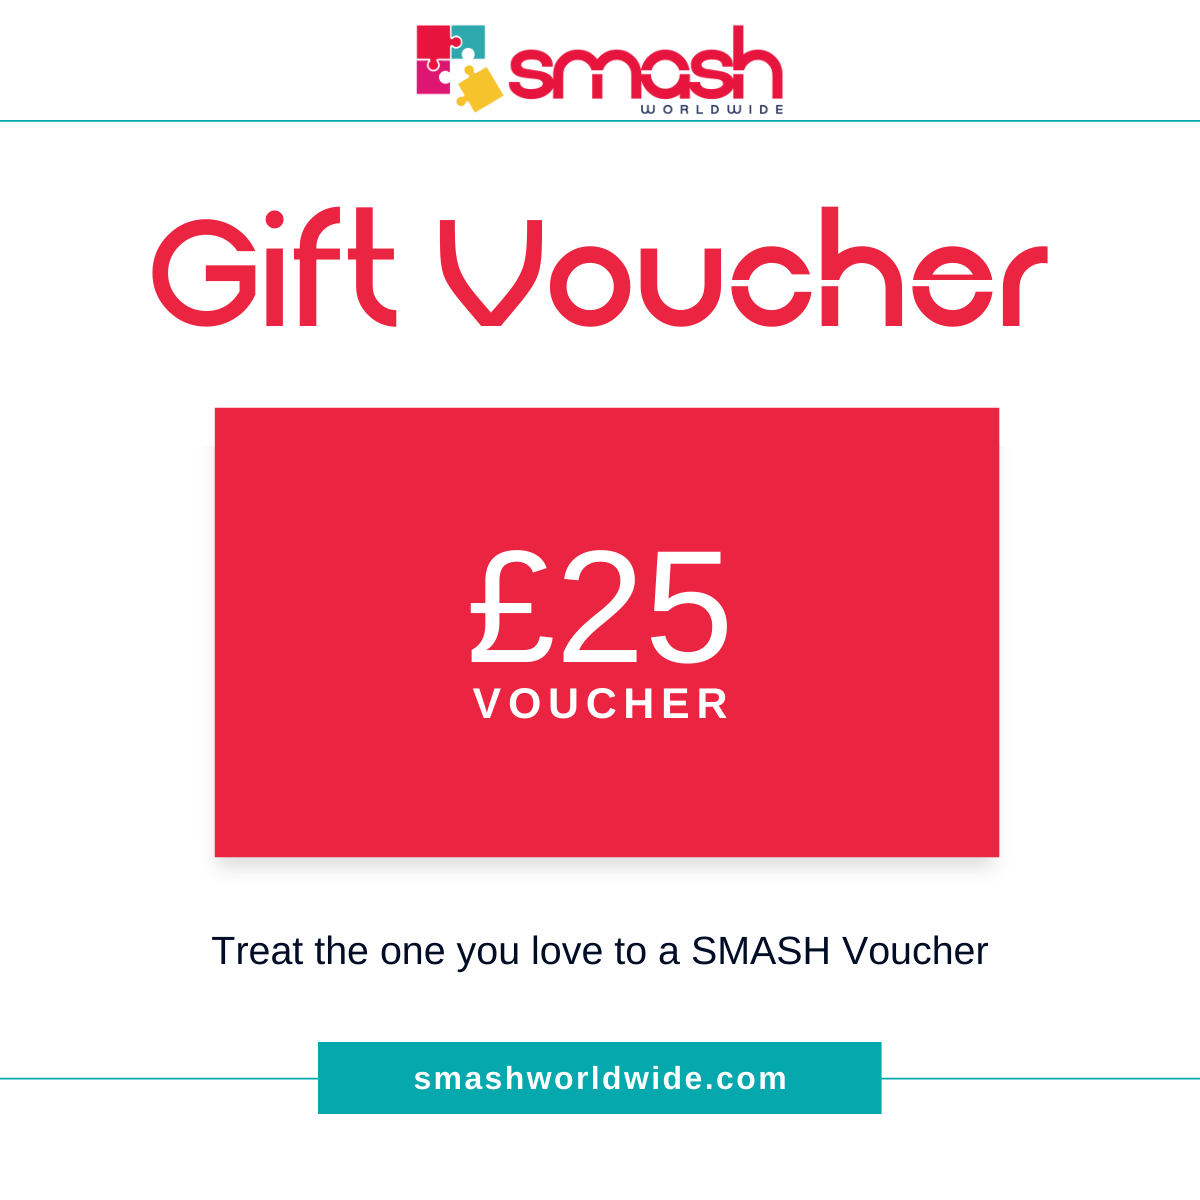 SMASH Worldwide Gift Voucher